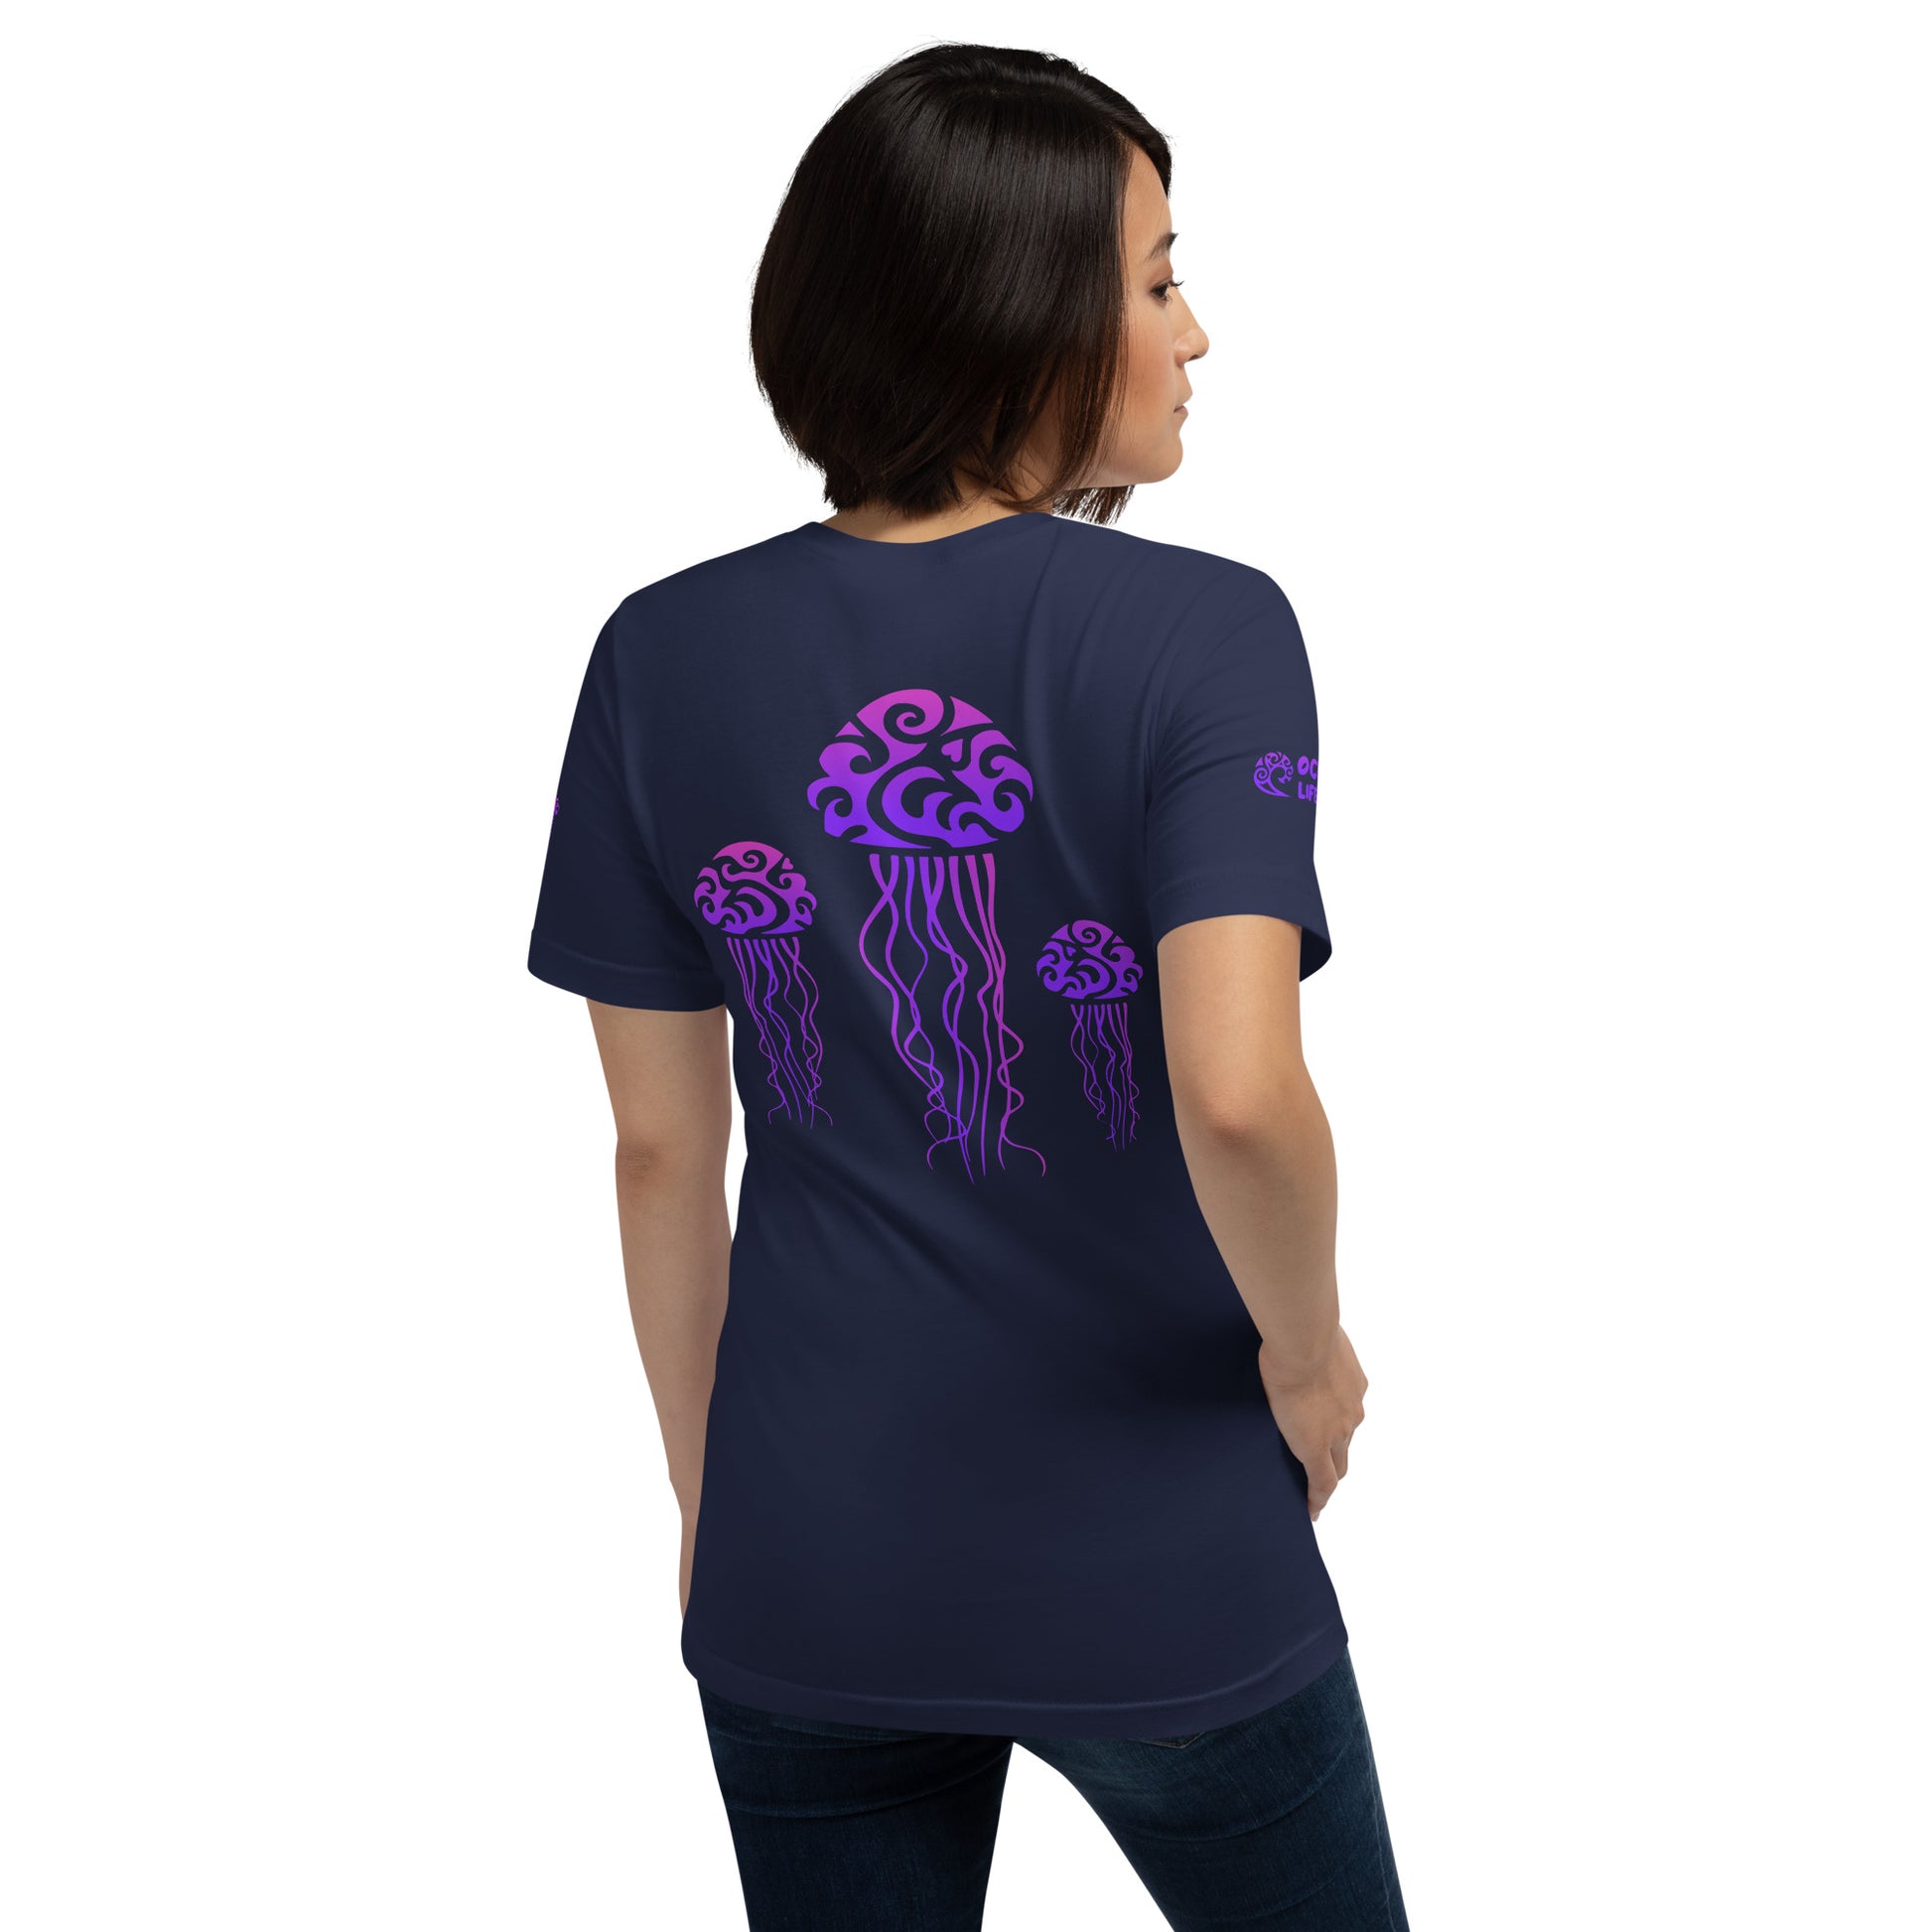 Polynesian T-shirt Jellyfish Tribal Samoan For Men and Women Back Right Purple on Navy